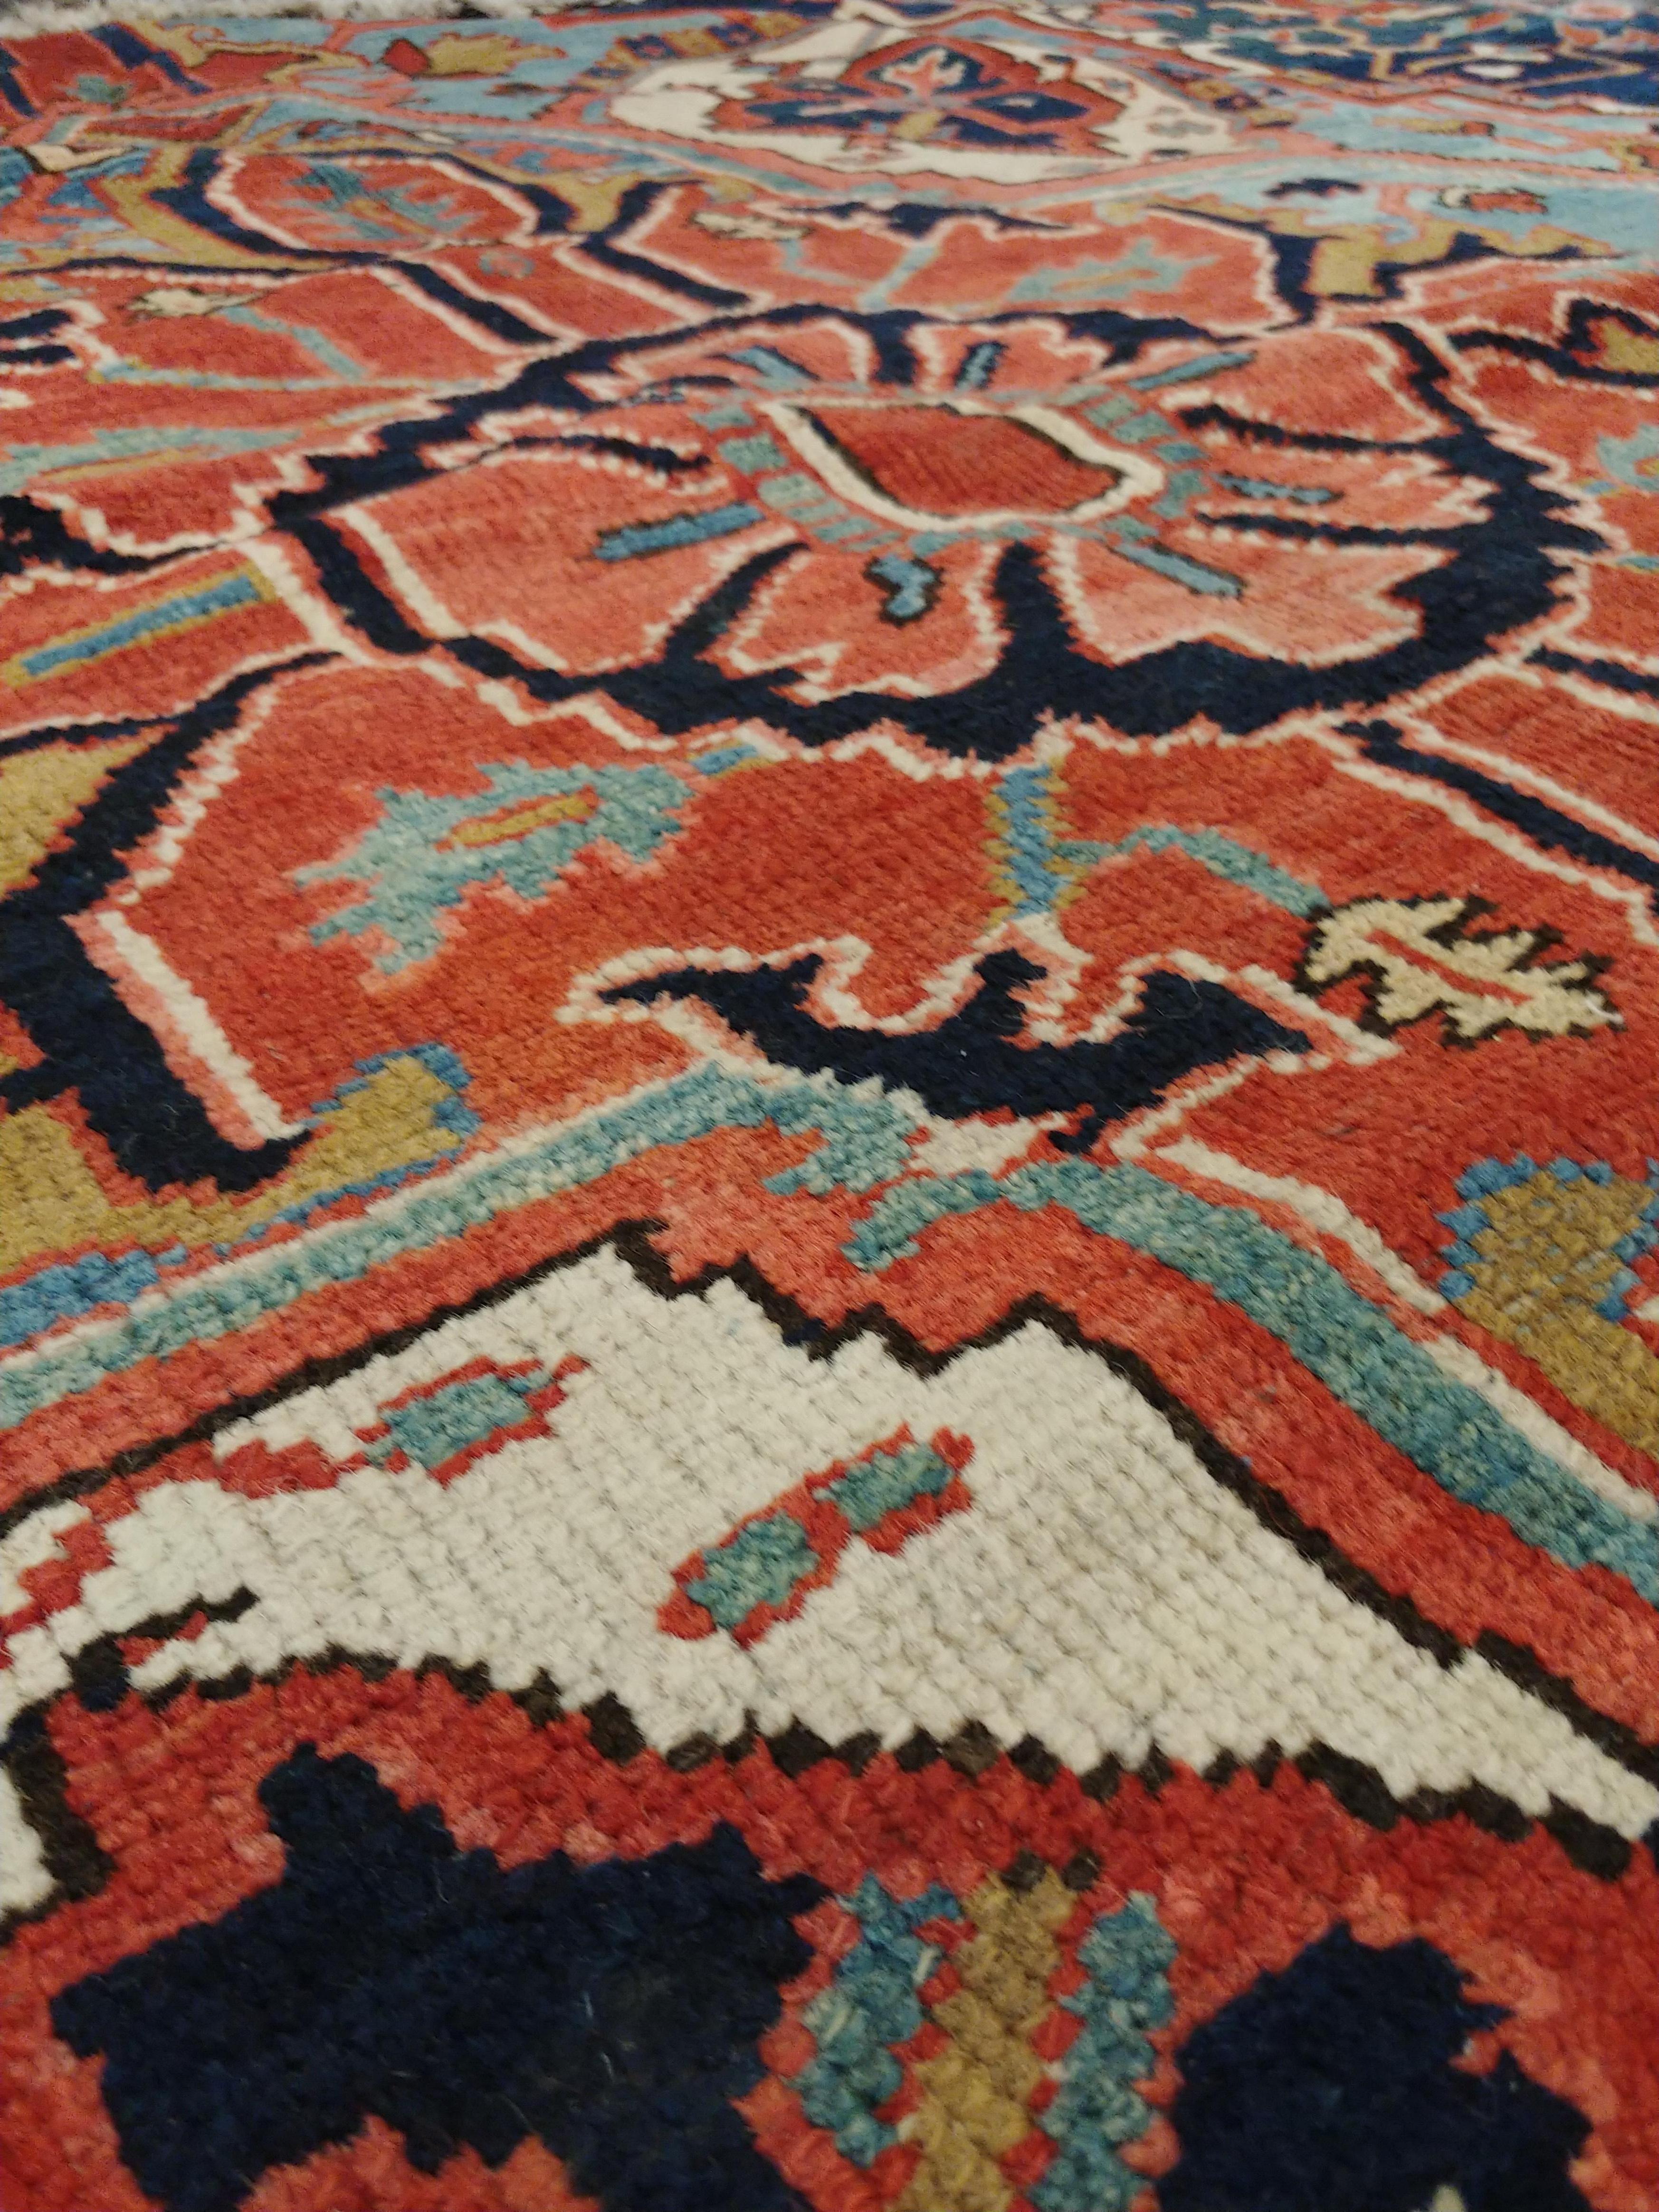 Antique Persian Heriz Carpet, Handmade Wool Oriental Rug, Rust, Navy, Lt Blue 1